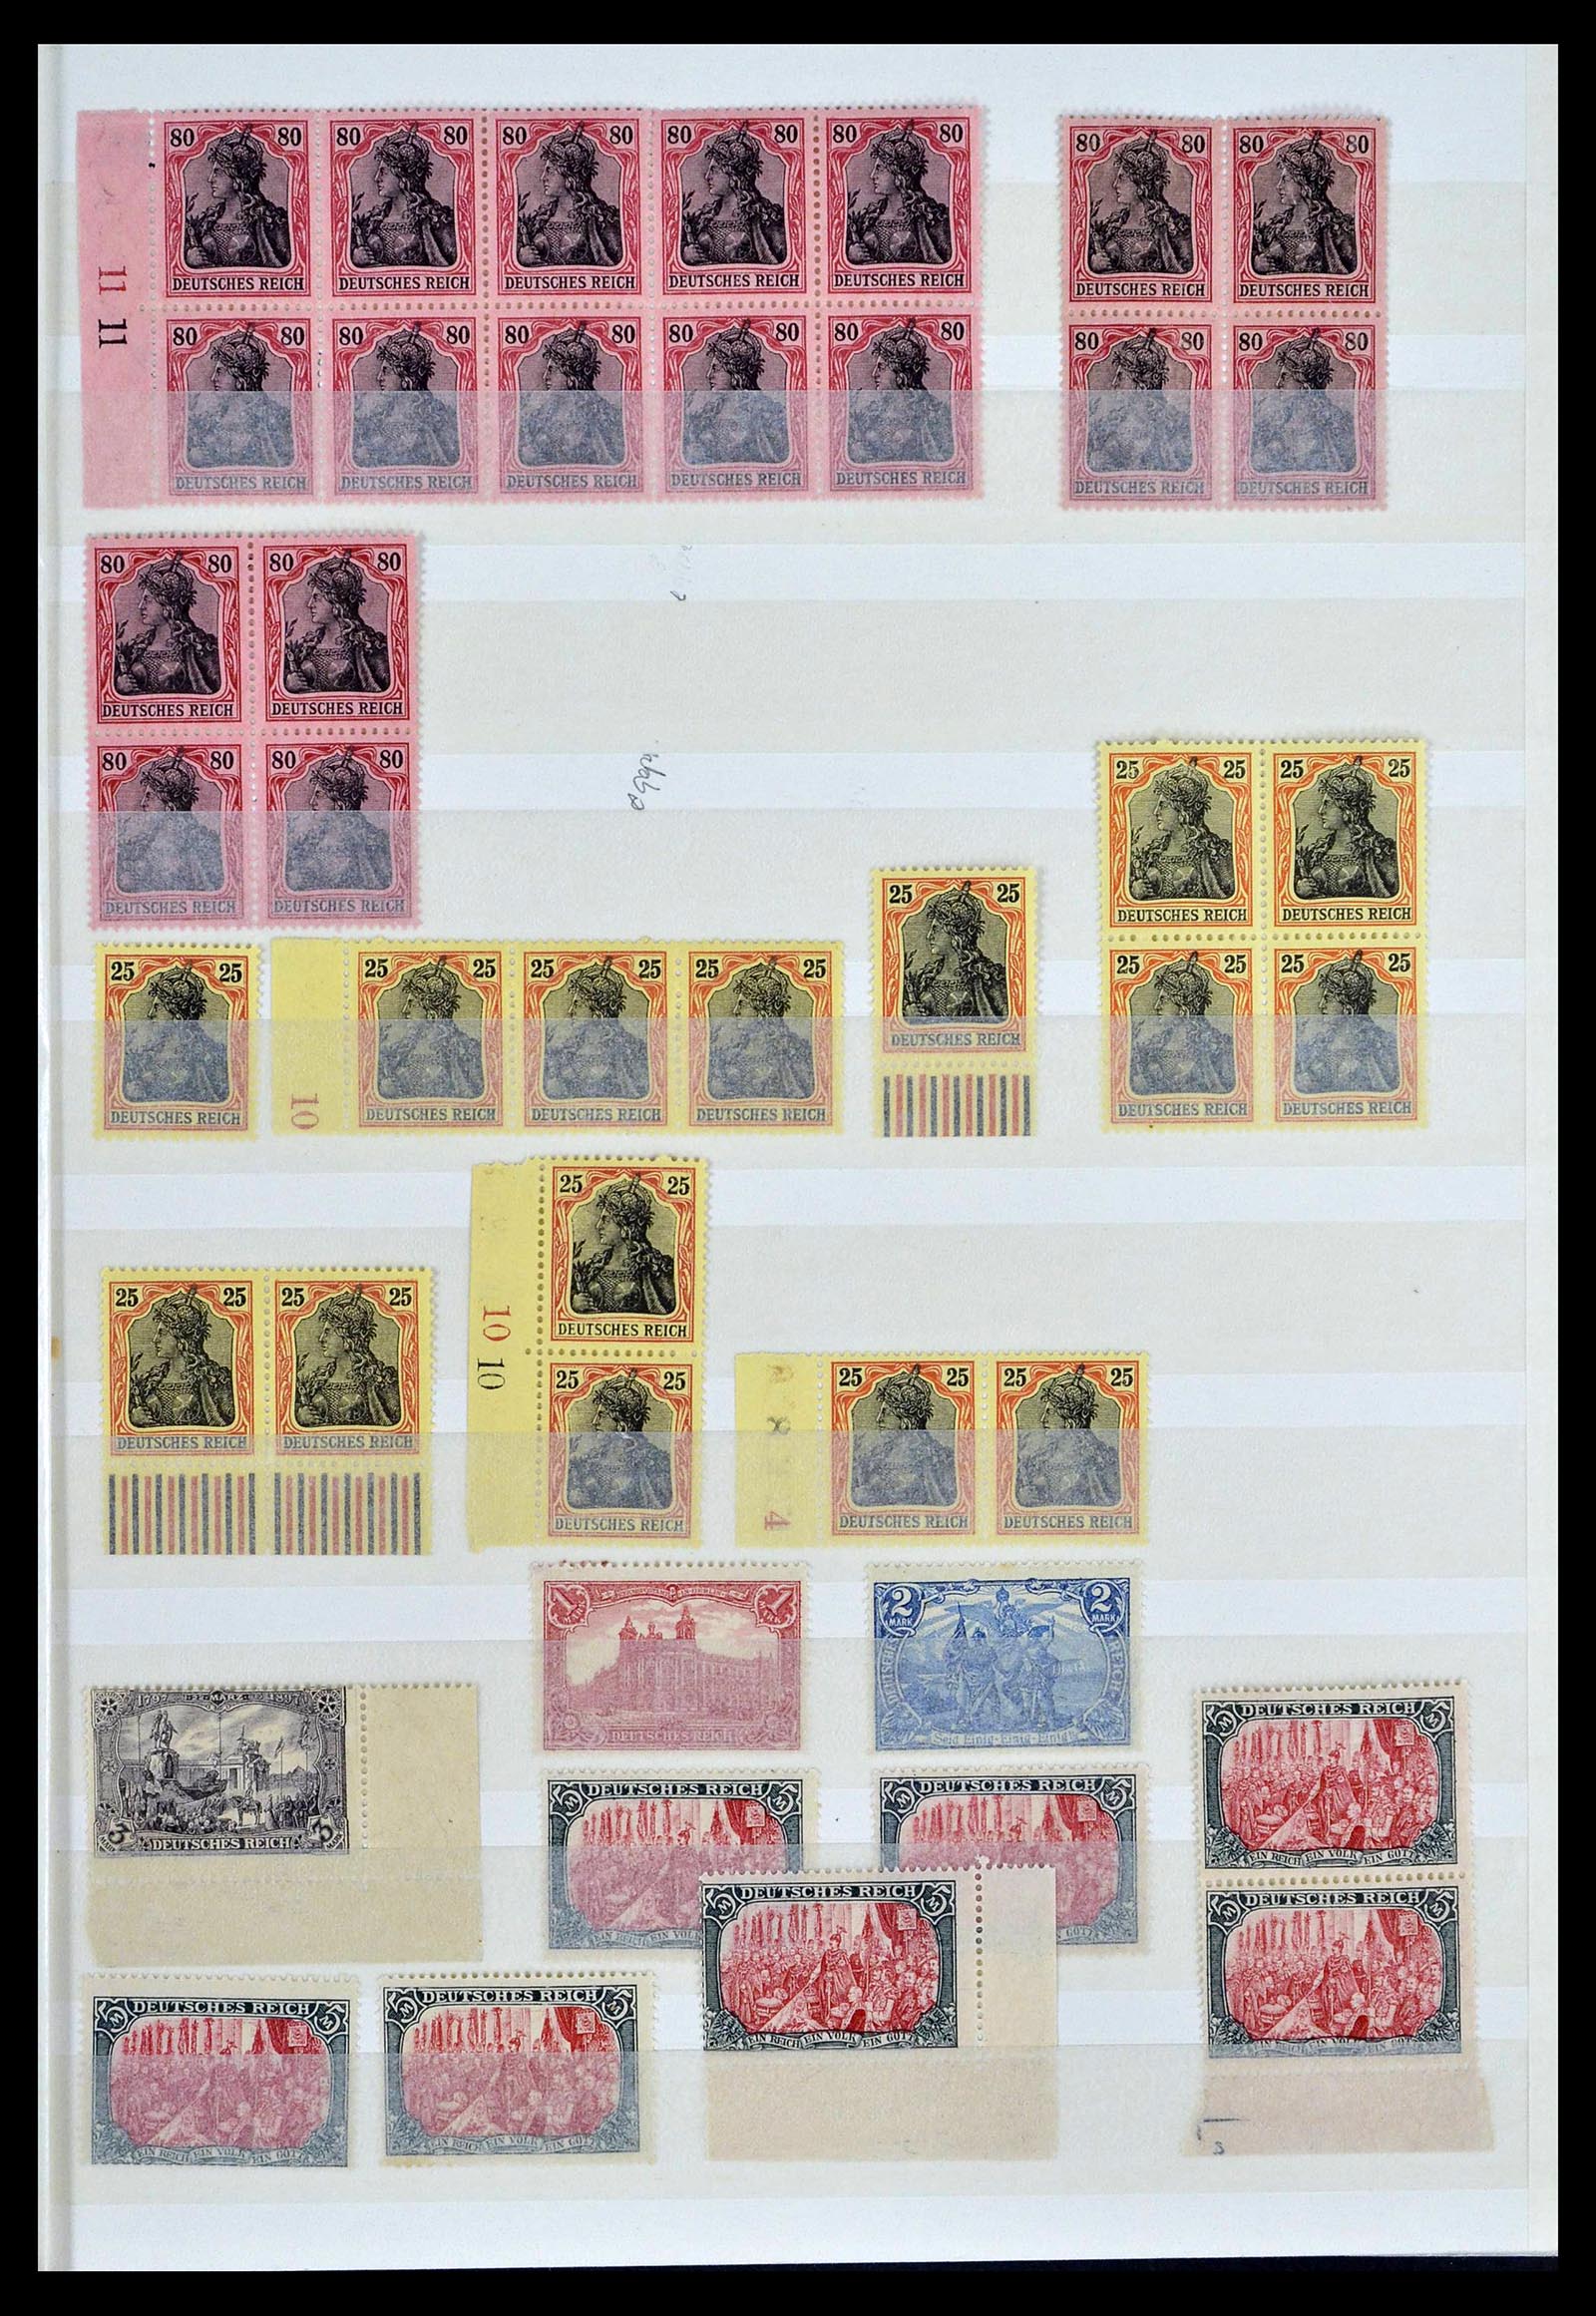 39256 0005 - Stamp collection 39256 German Reich MNH.